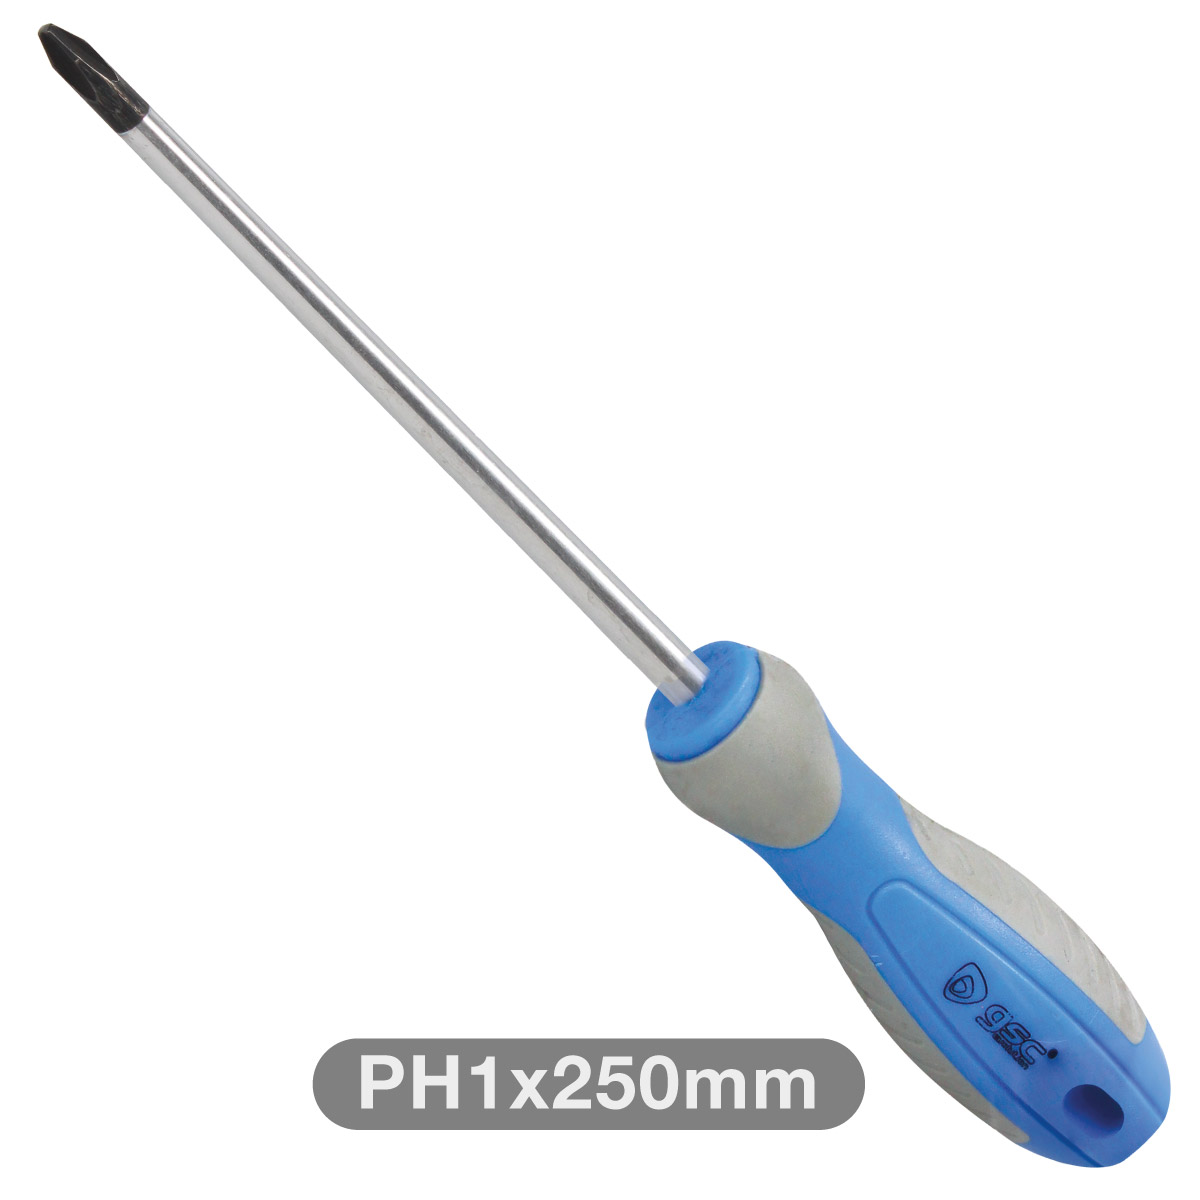 Philips screwdriver PH1x250mm